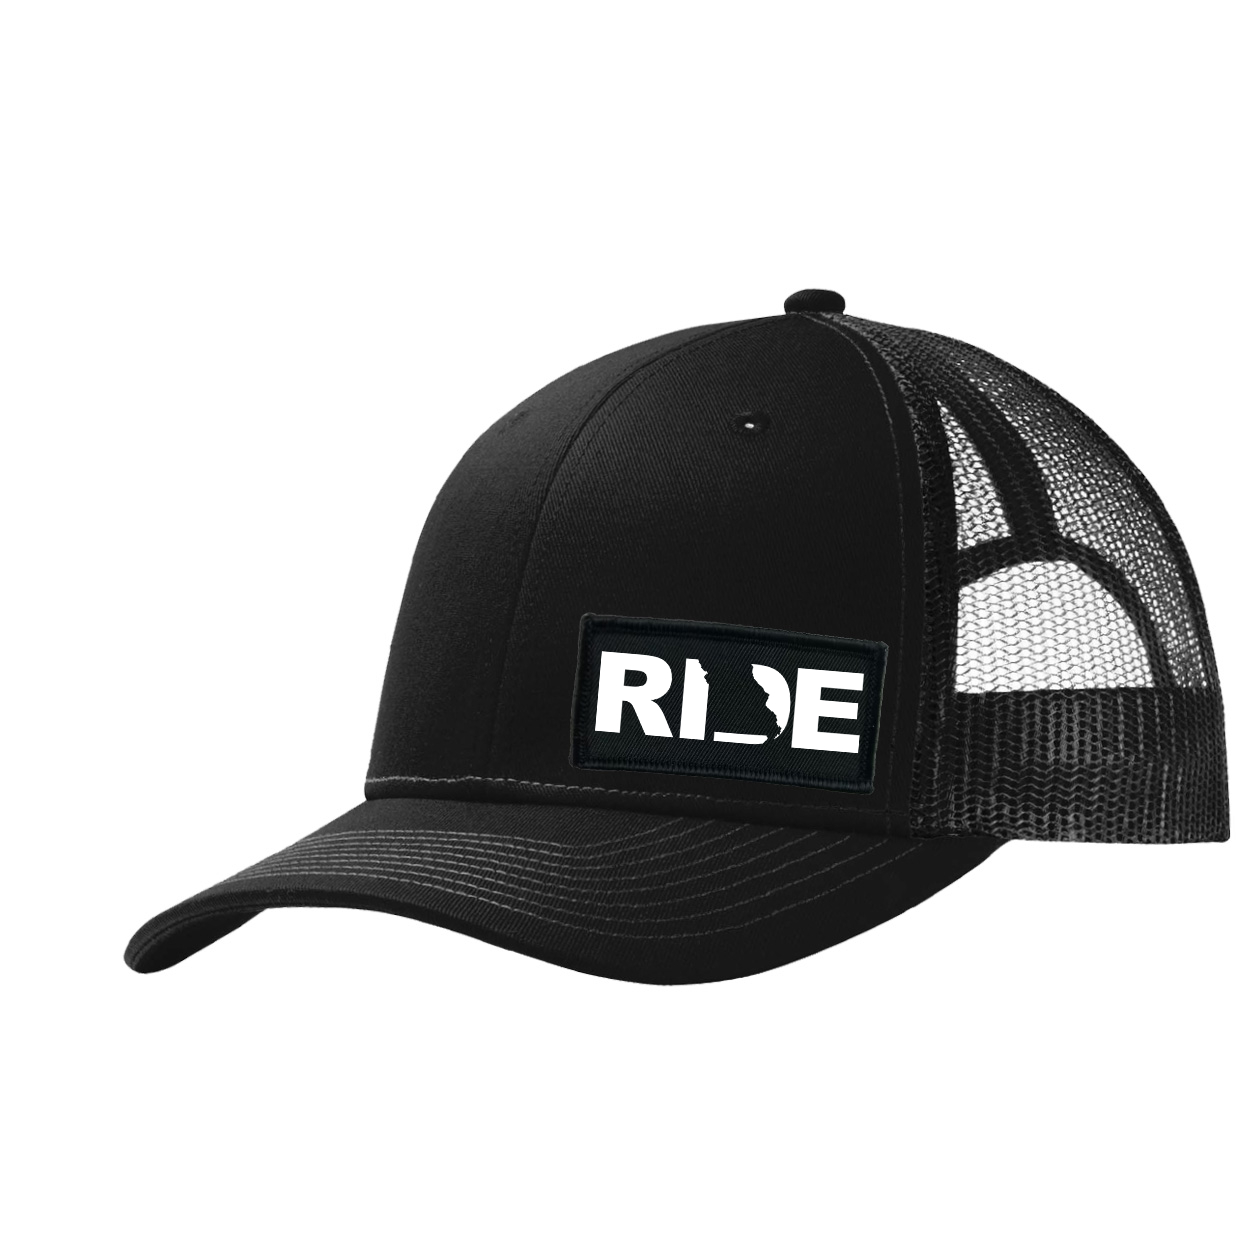 Ride Missouri Night Out Woven Patch Snapback Trucker Hat Black (White Logo)